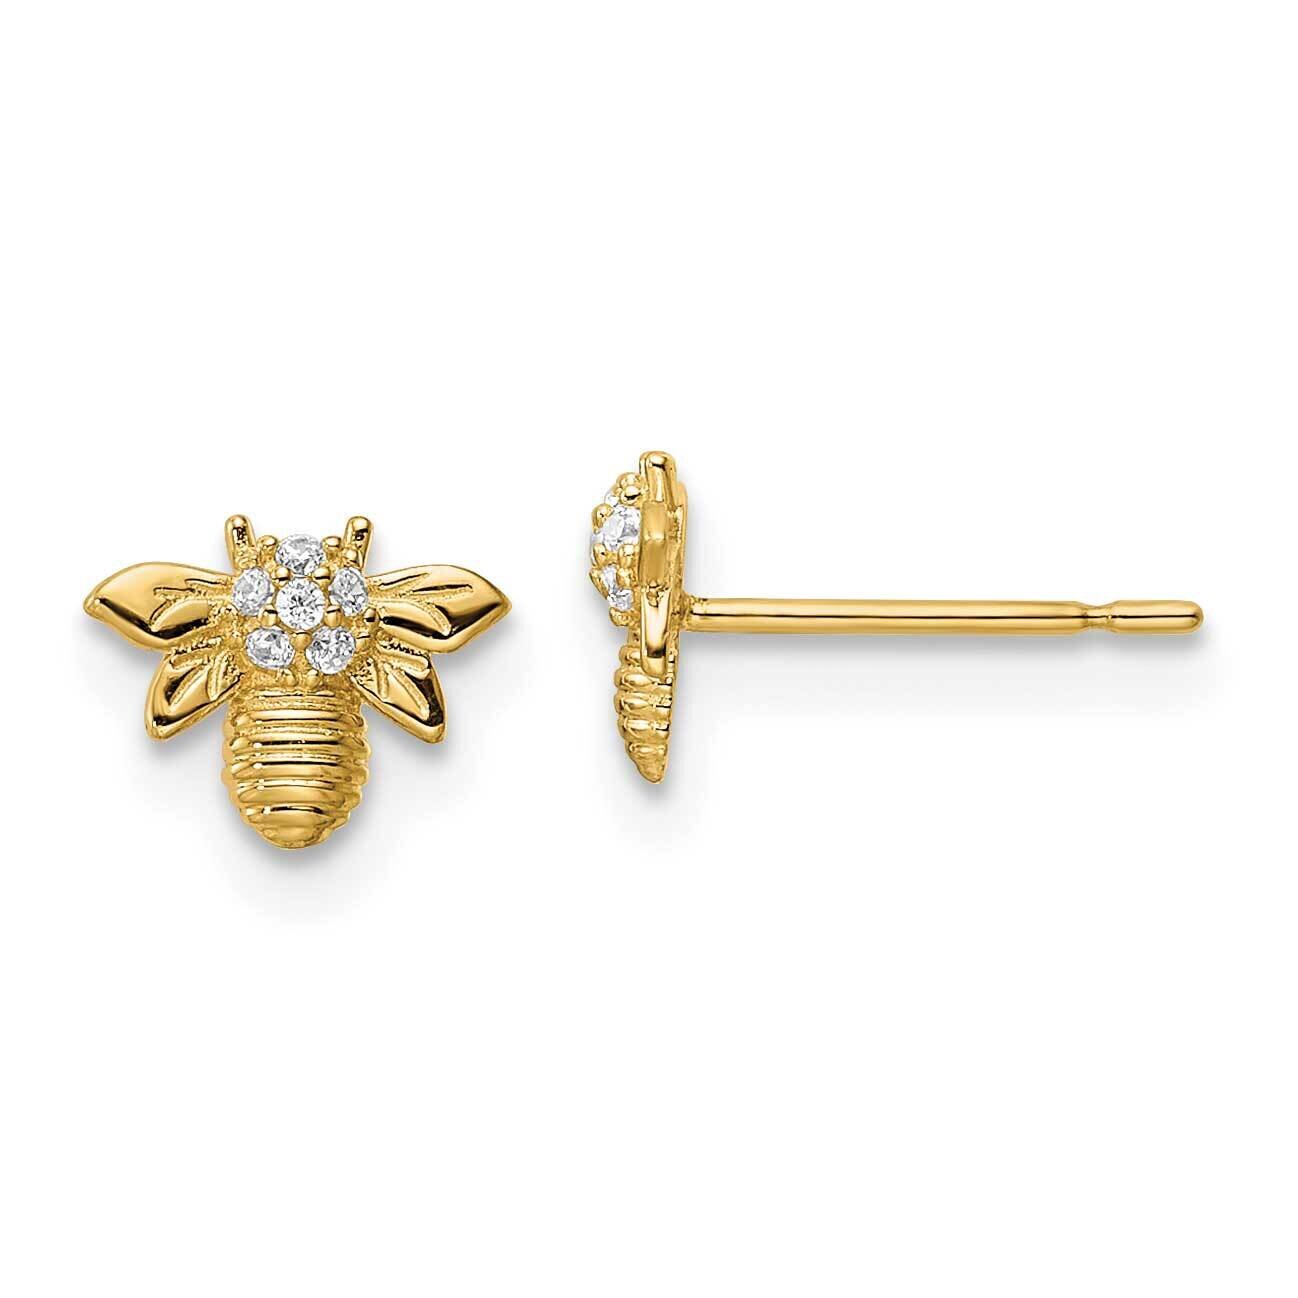 Bumble Bee Post Earrings 14k Gold CZ Diamond GK1130